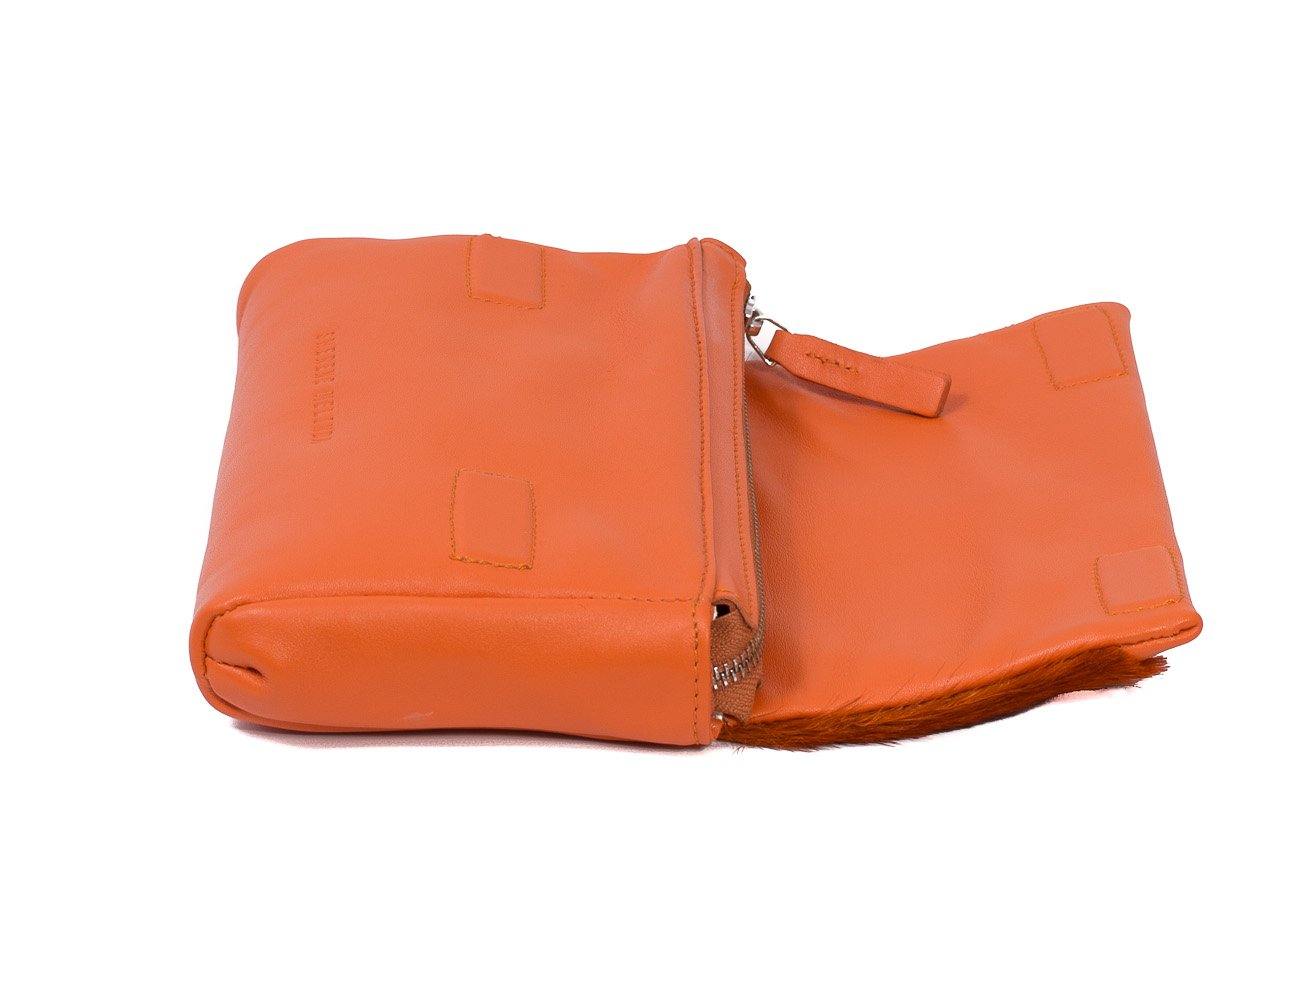 sherene melinda springbok hair-on-hide orange leather Sophy SS18 Clutch Bag Stripe open